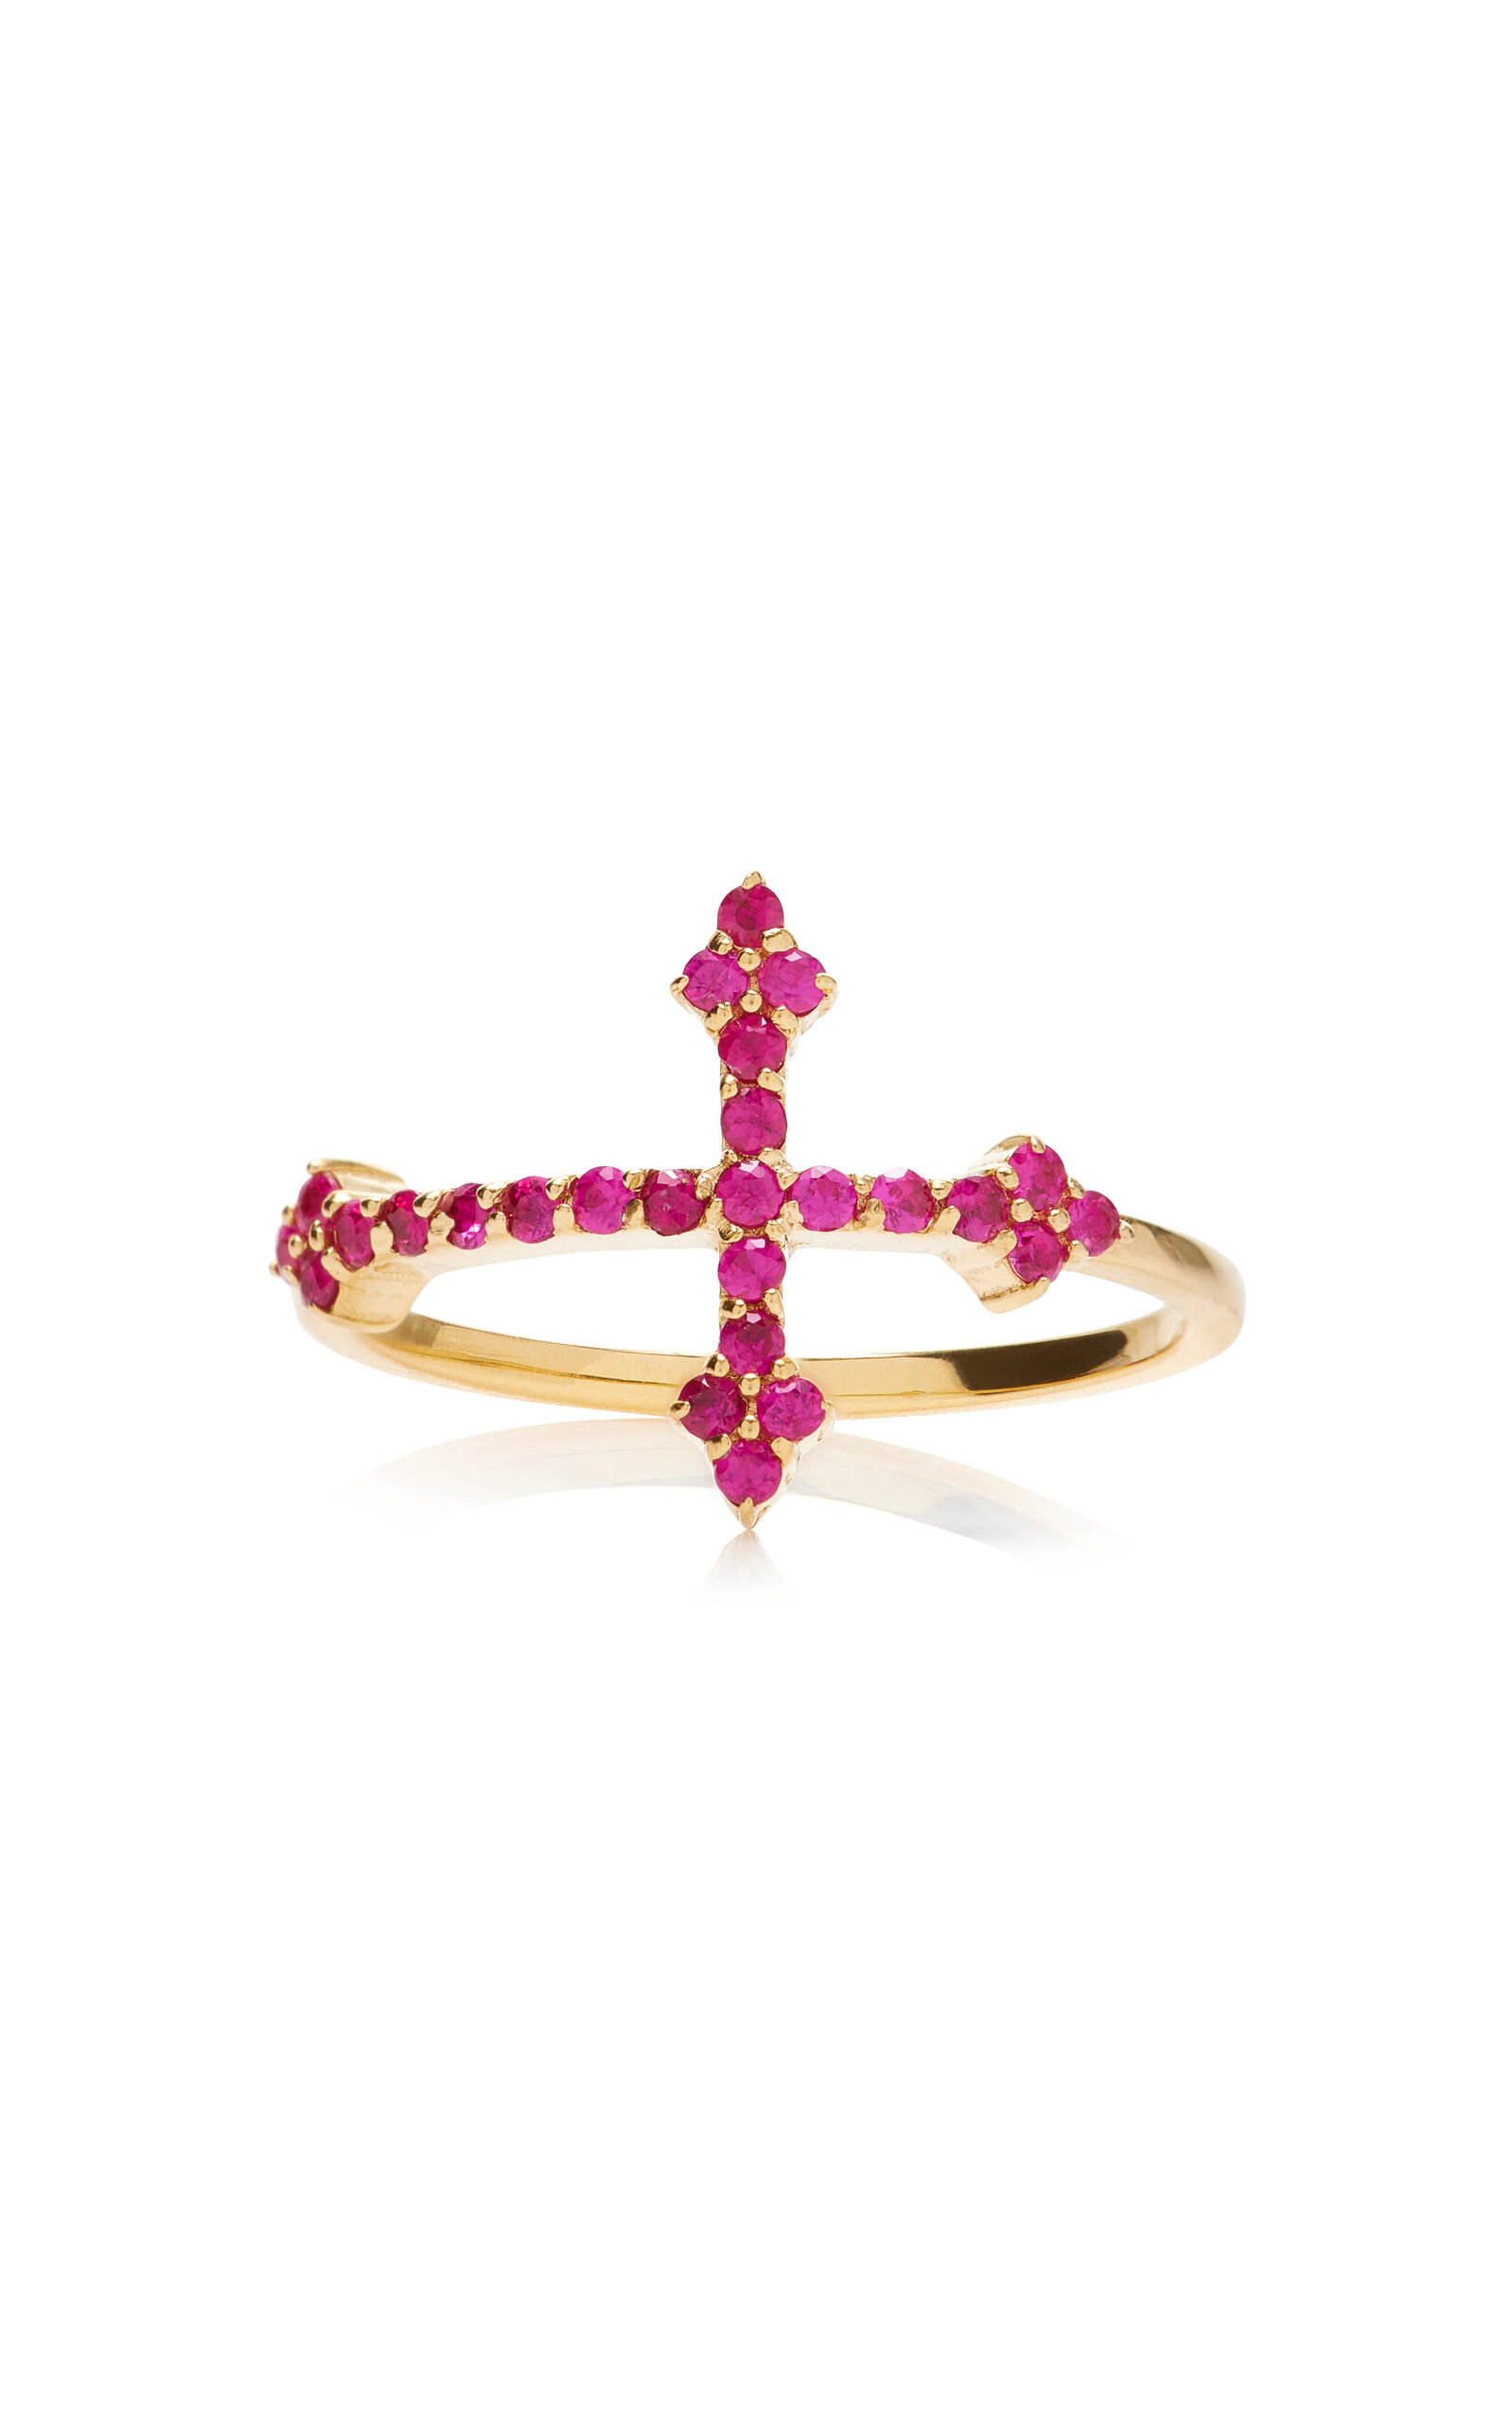 DRU. Women's Cross Your Fingers 14K Yellow Gold Ruby Ring